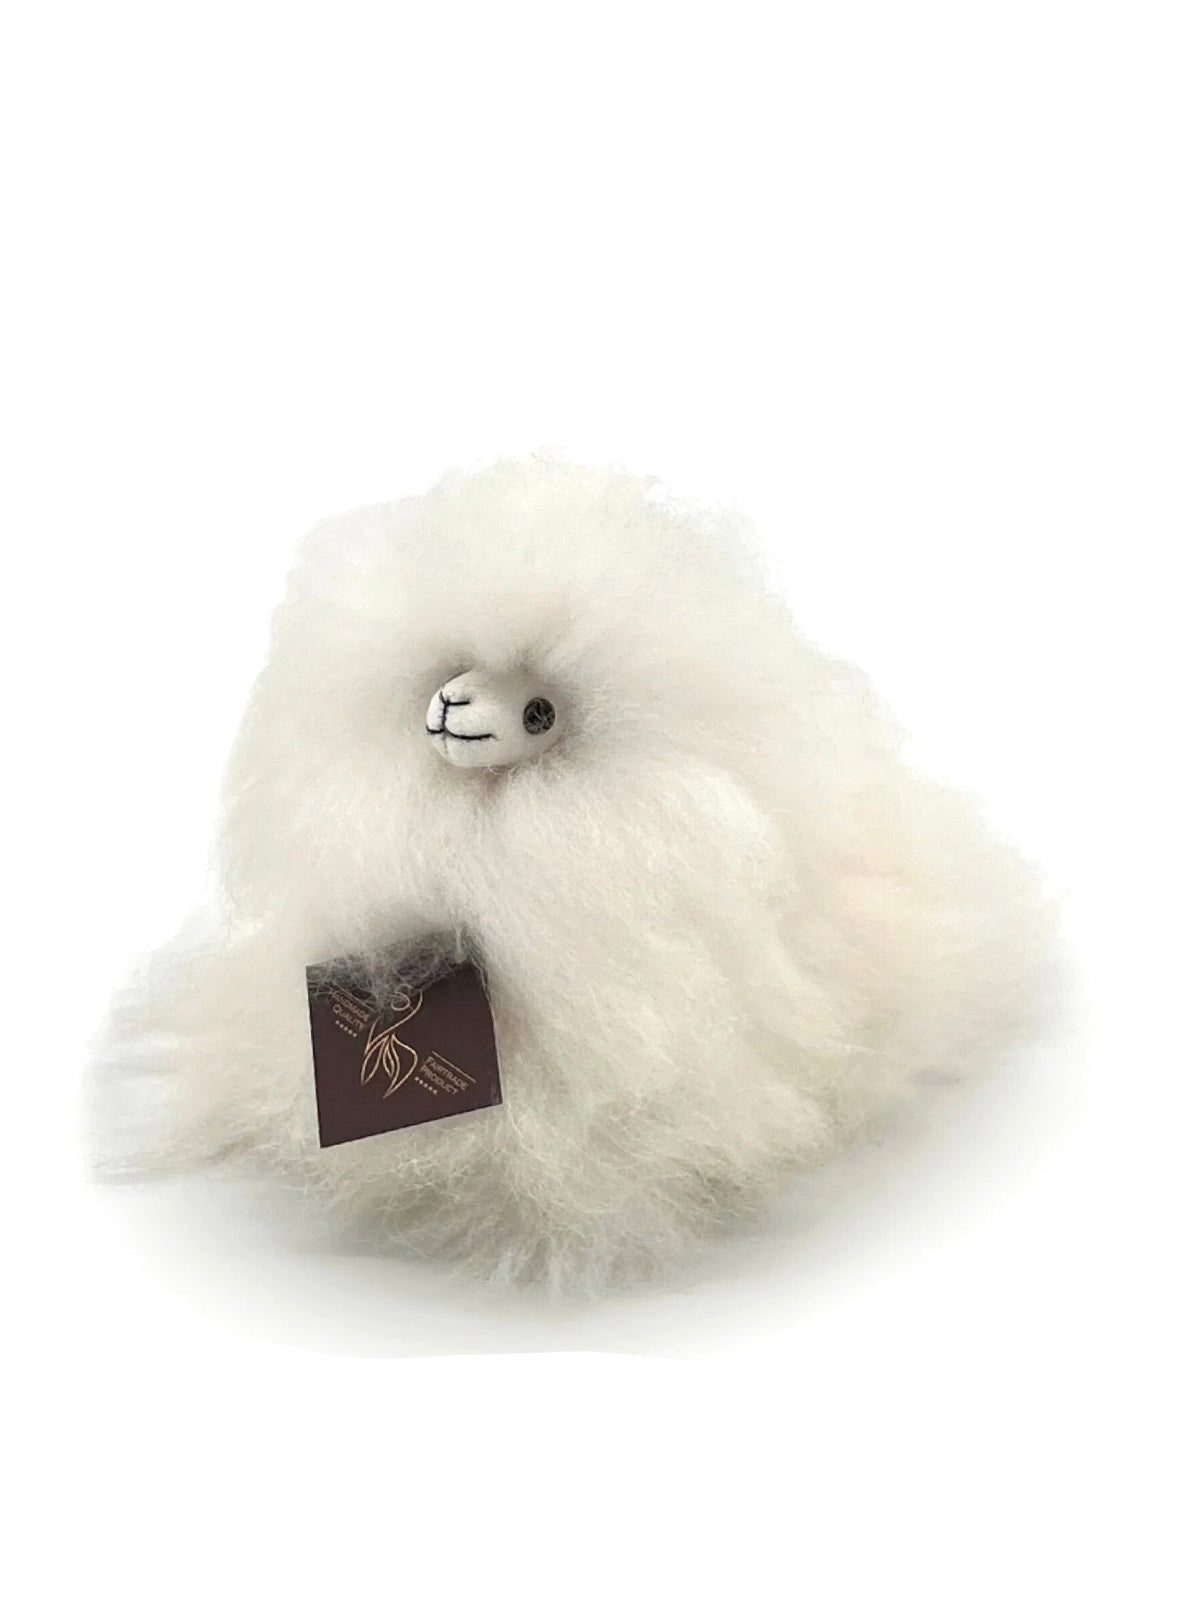 Inkari Alpaca soft toy-Monsterfluff- IVORY-Mini 15cm